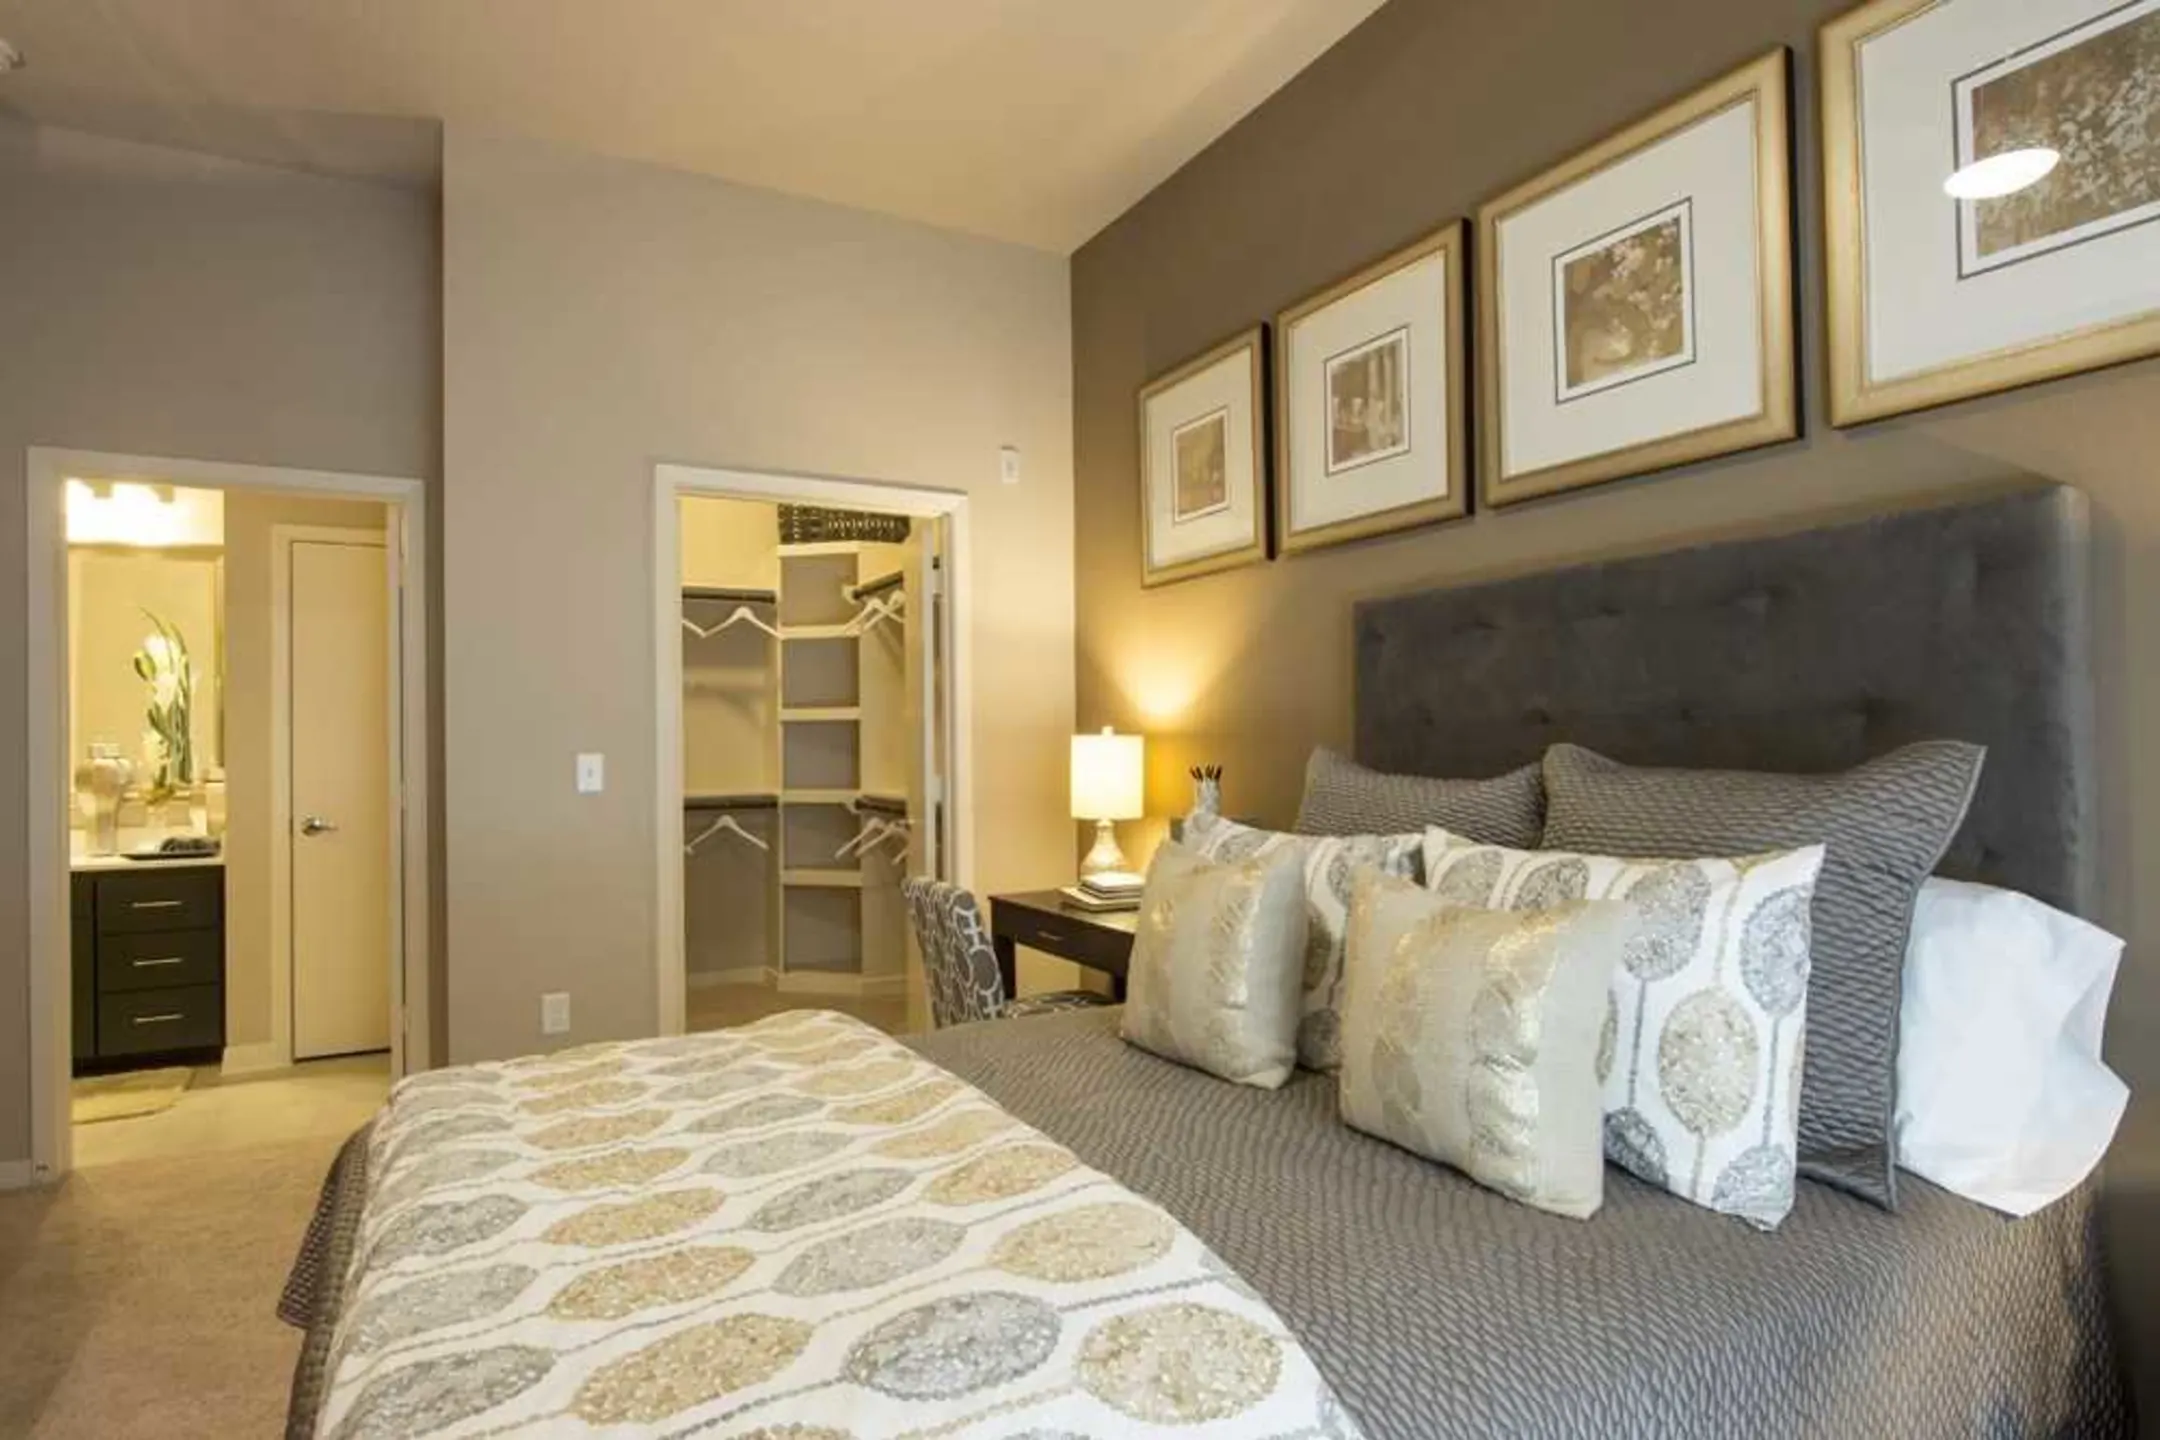 Bedroom - Flats at Uptown - Dallas, TX